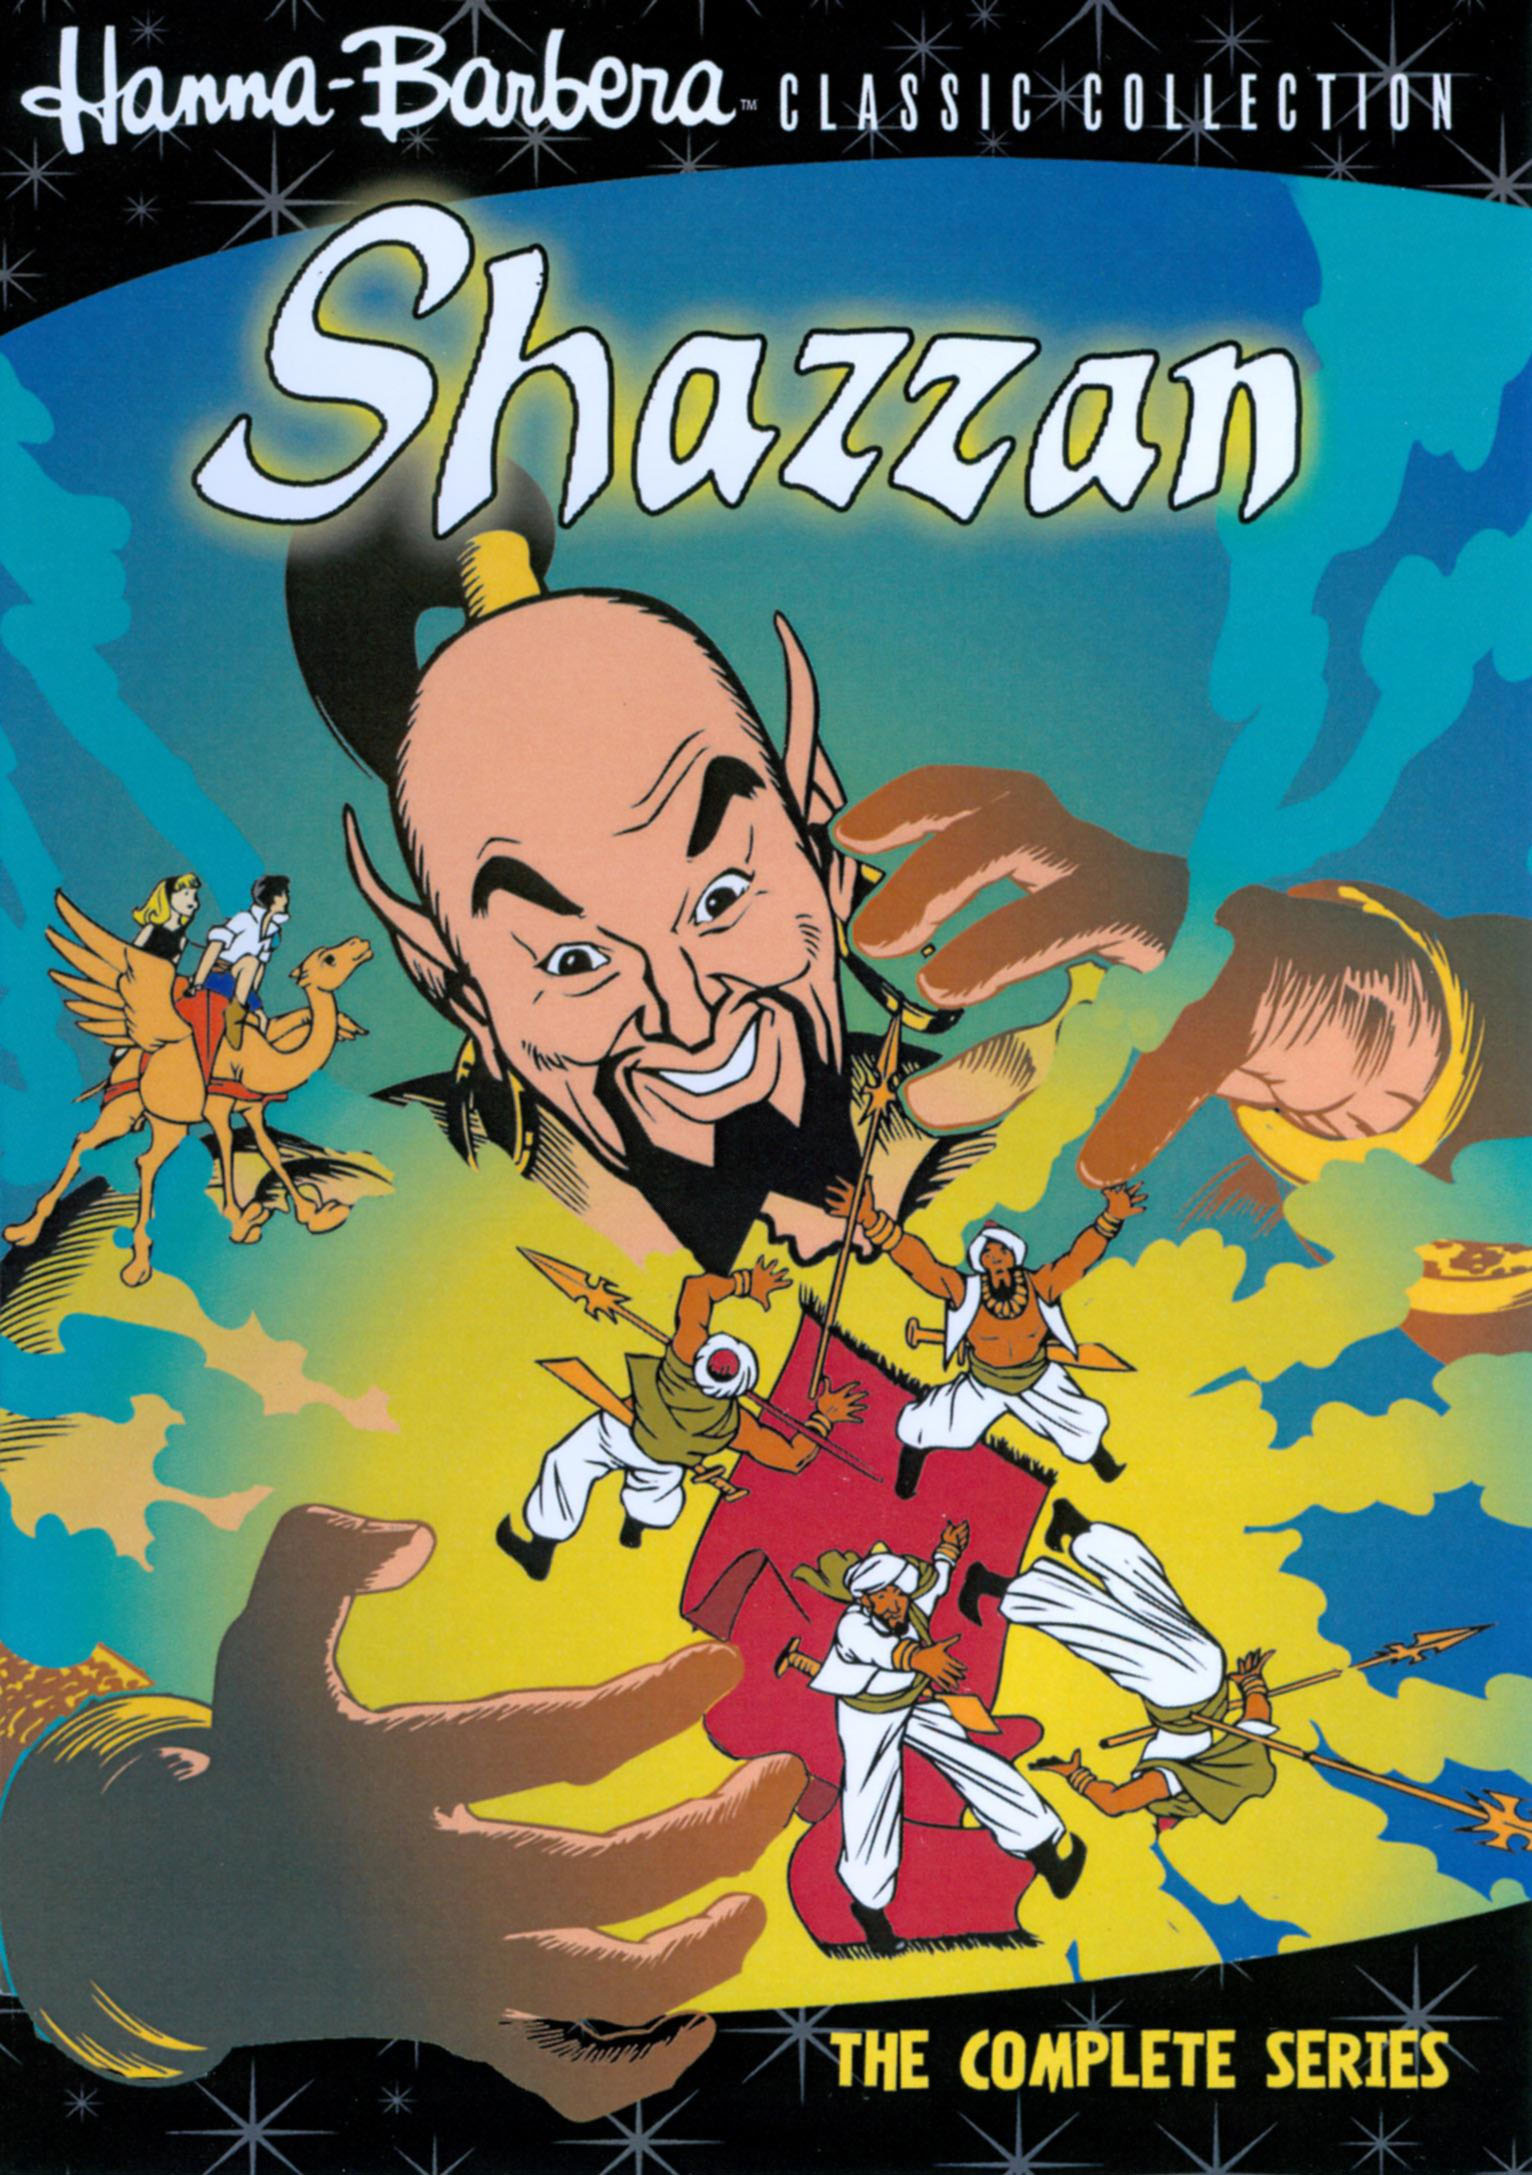 Hanna-Barbera Classic Collection: Shazzan The Complete Series [2 Discs ...